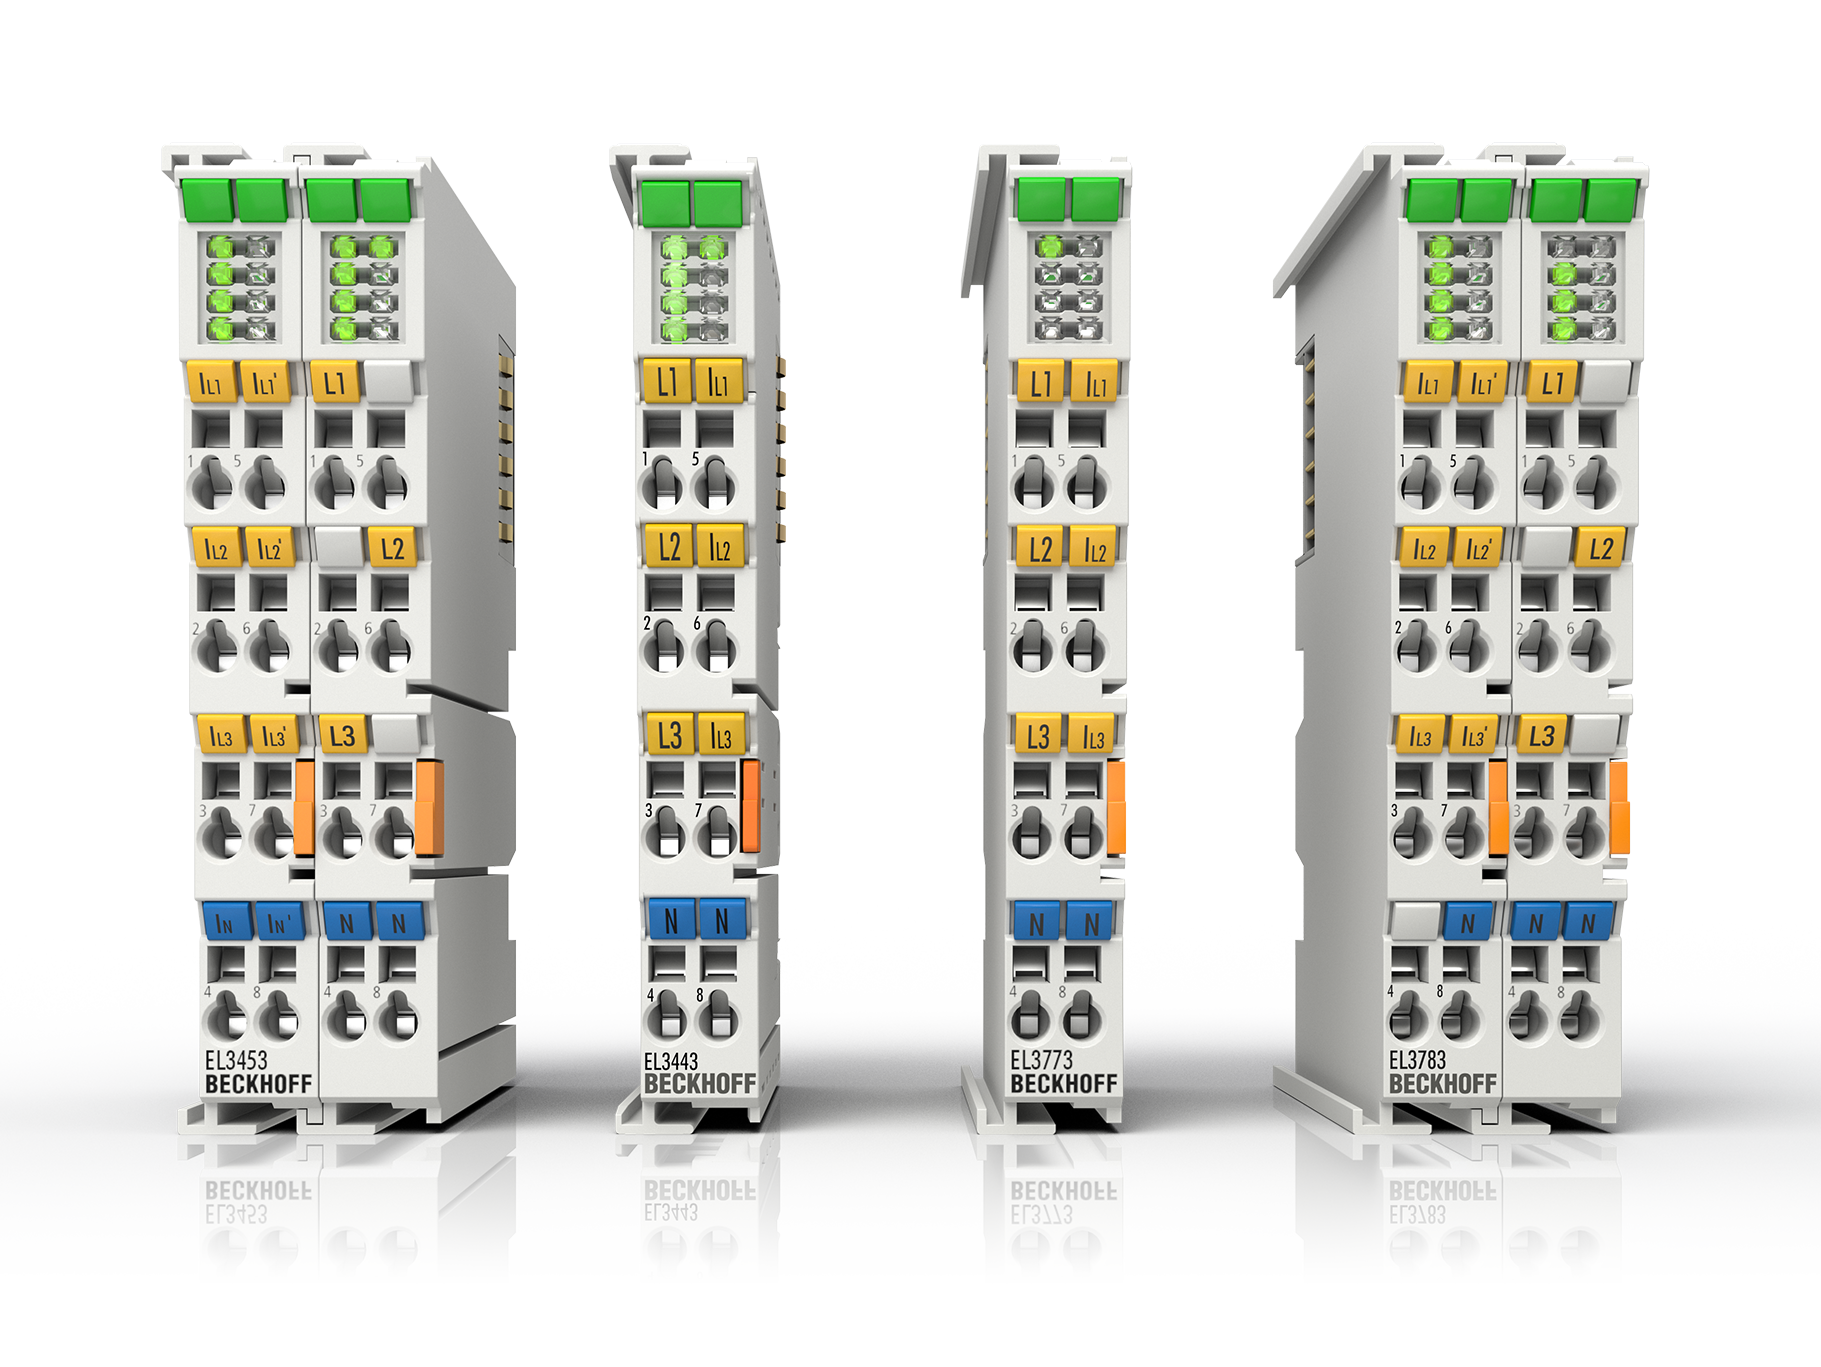 EtherCAT 电力监测端子模块 EL3773 和 EL3783 设计用于检测三相交流电压系统状态。